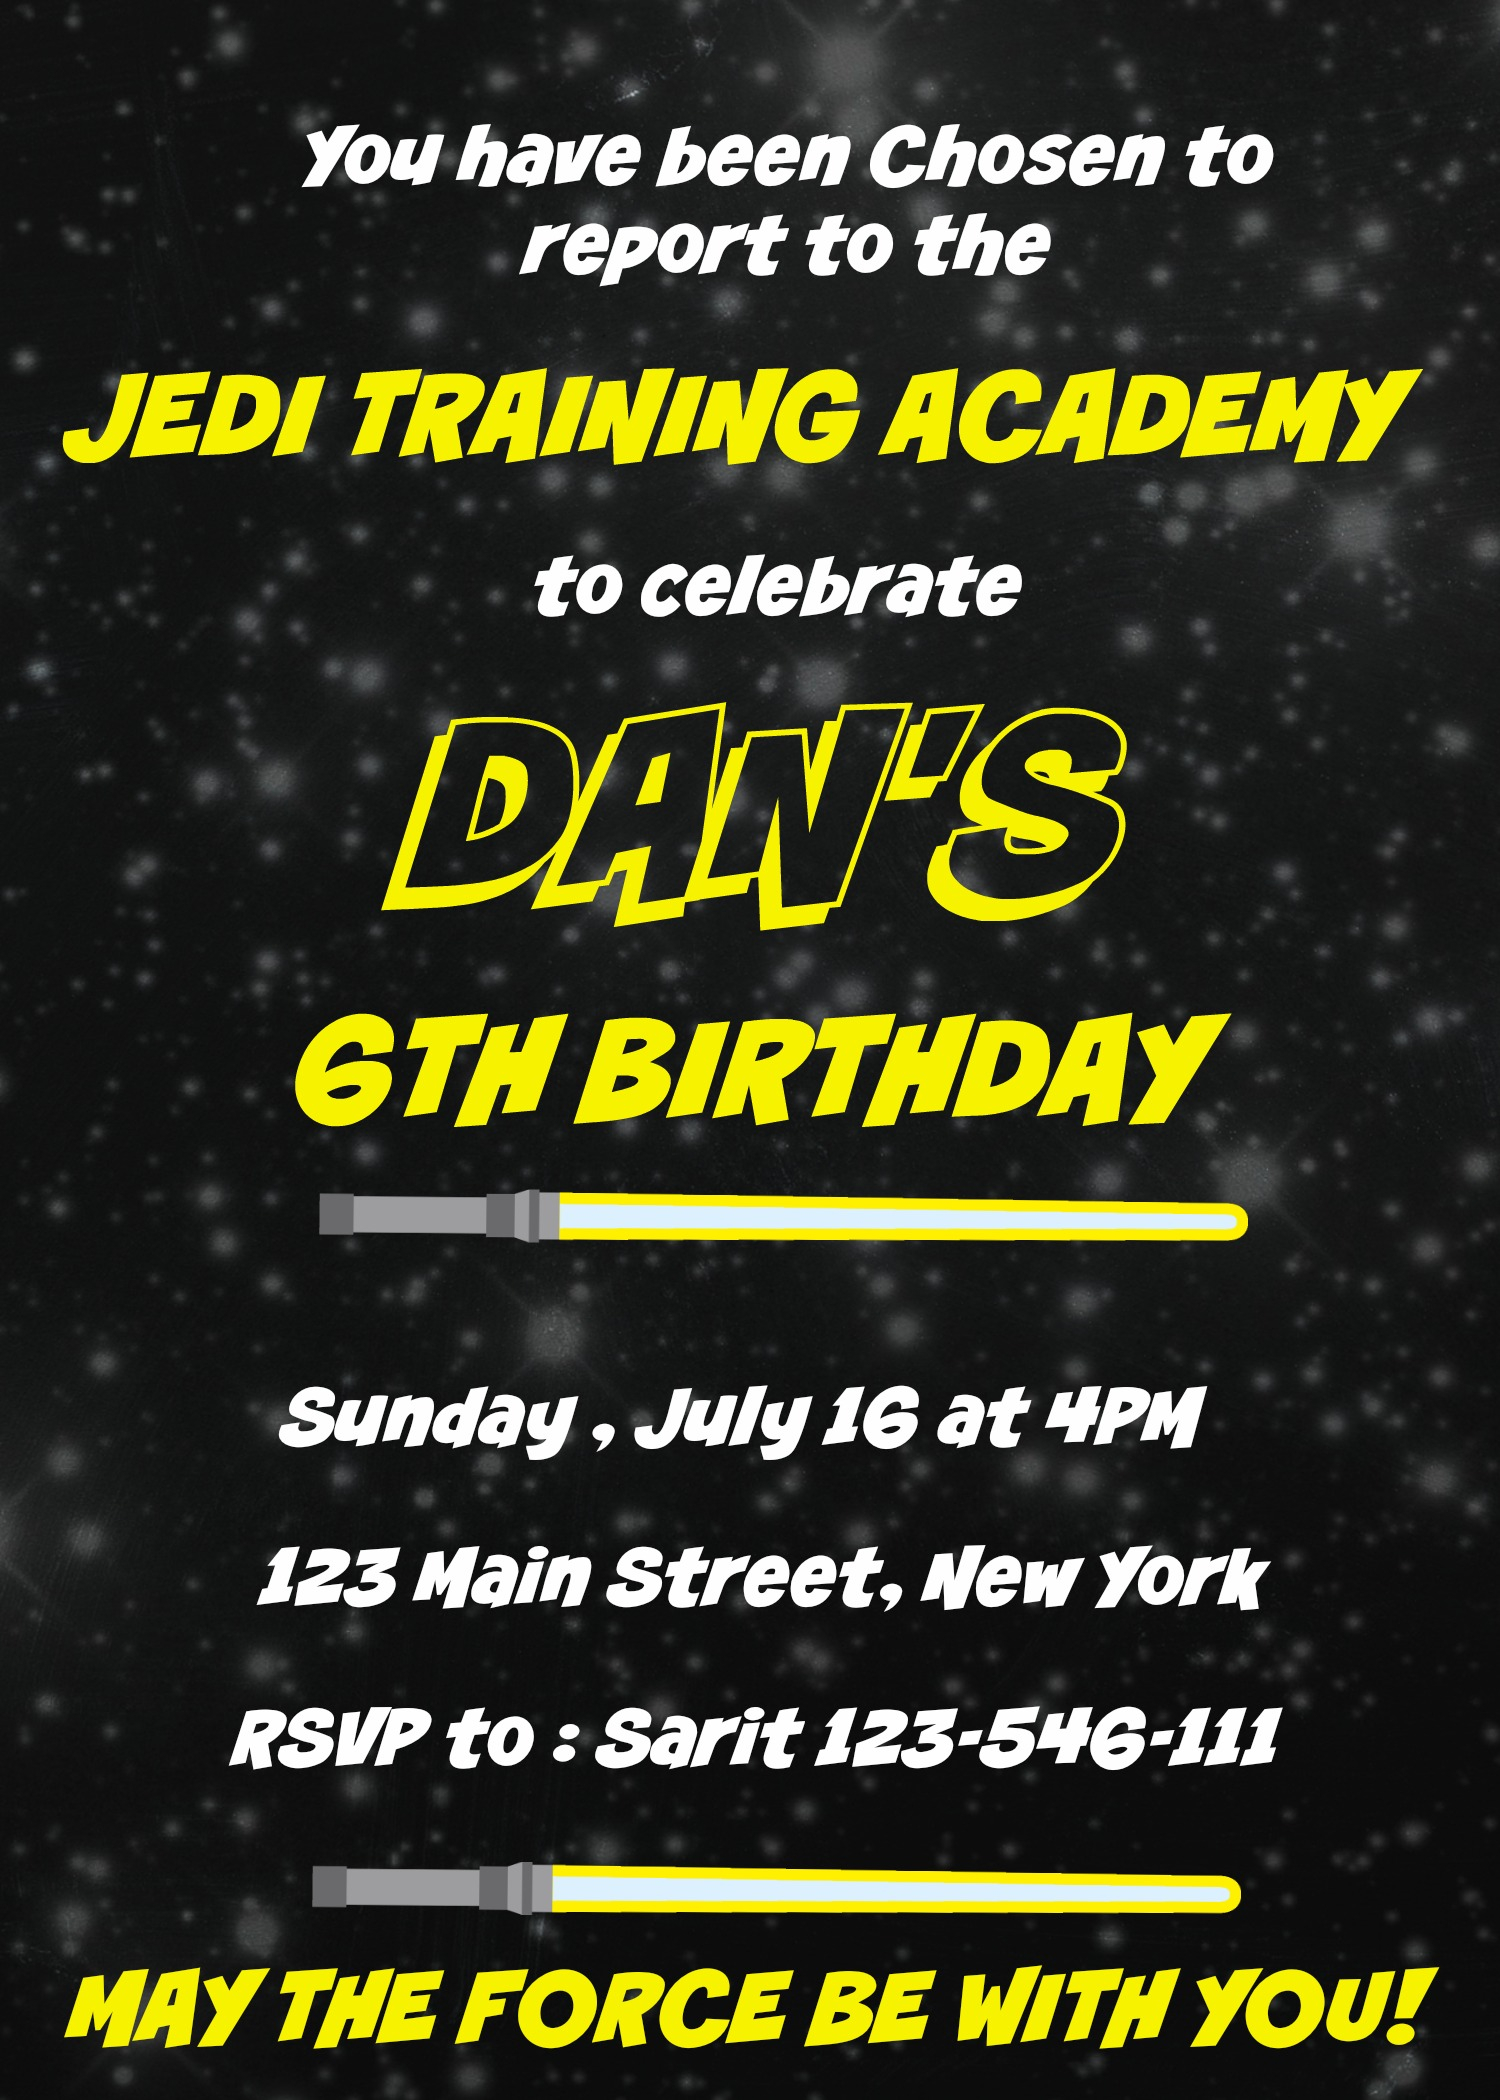 Star Wars Birthday Card Ideas Star Wars Birthday Party Ideas My Practical Birthday Guide